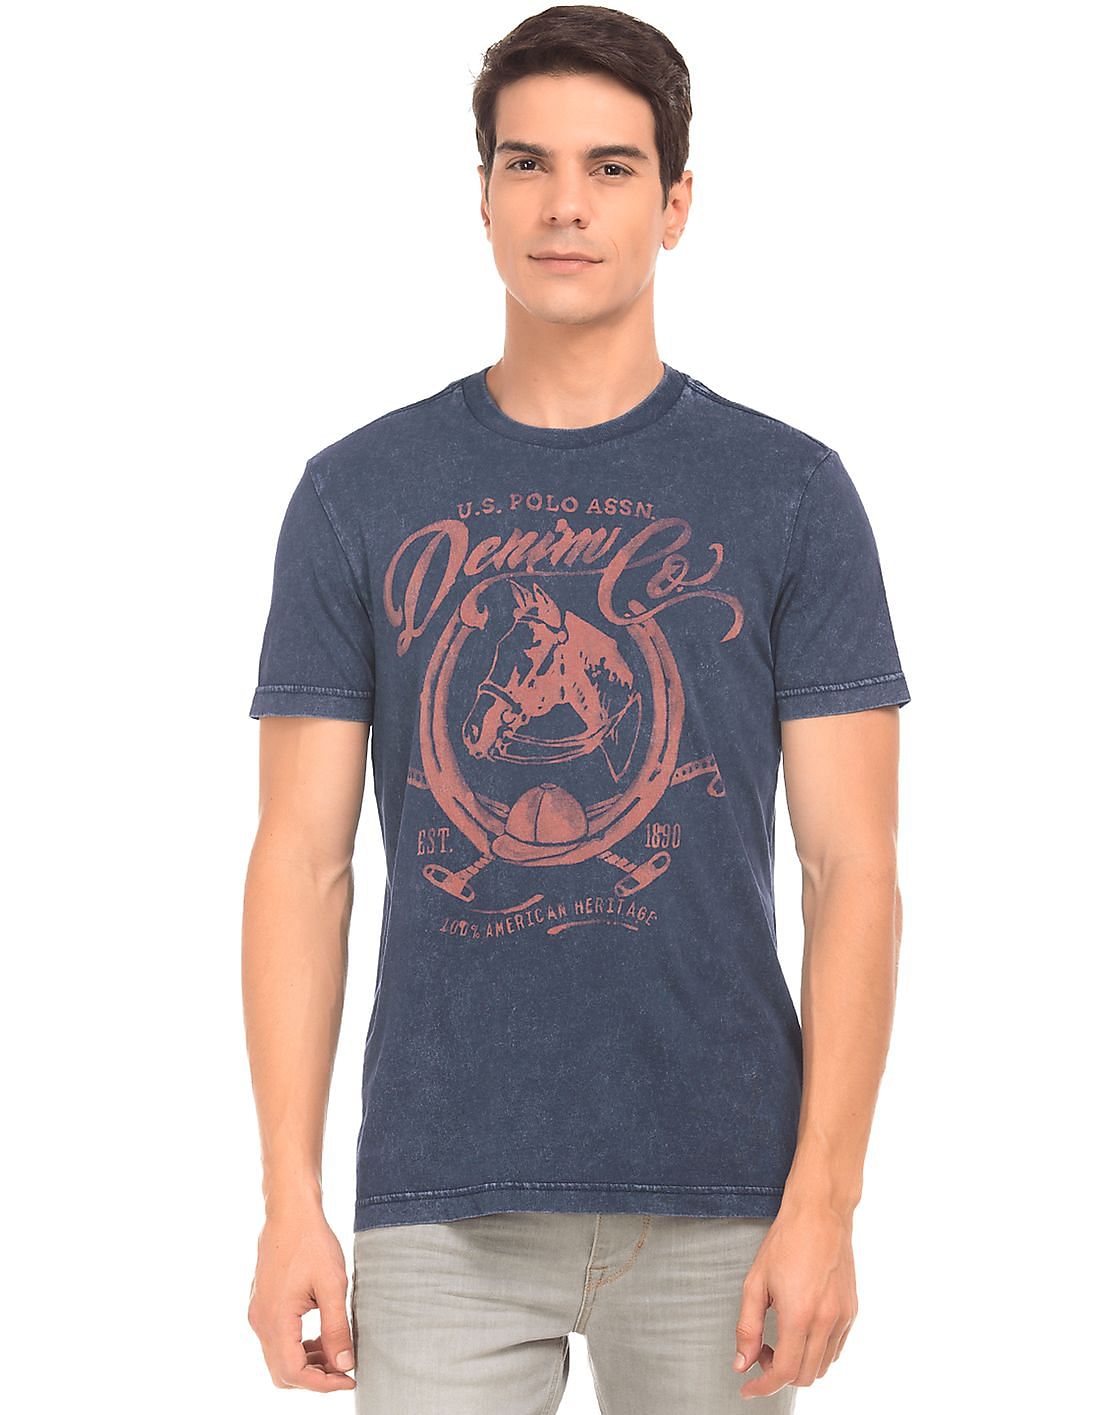 Buy U.S. Polo Assn. Denim Co. Brand Print Muscle Fit T-Shirt - NNNOW.com